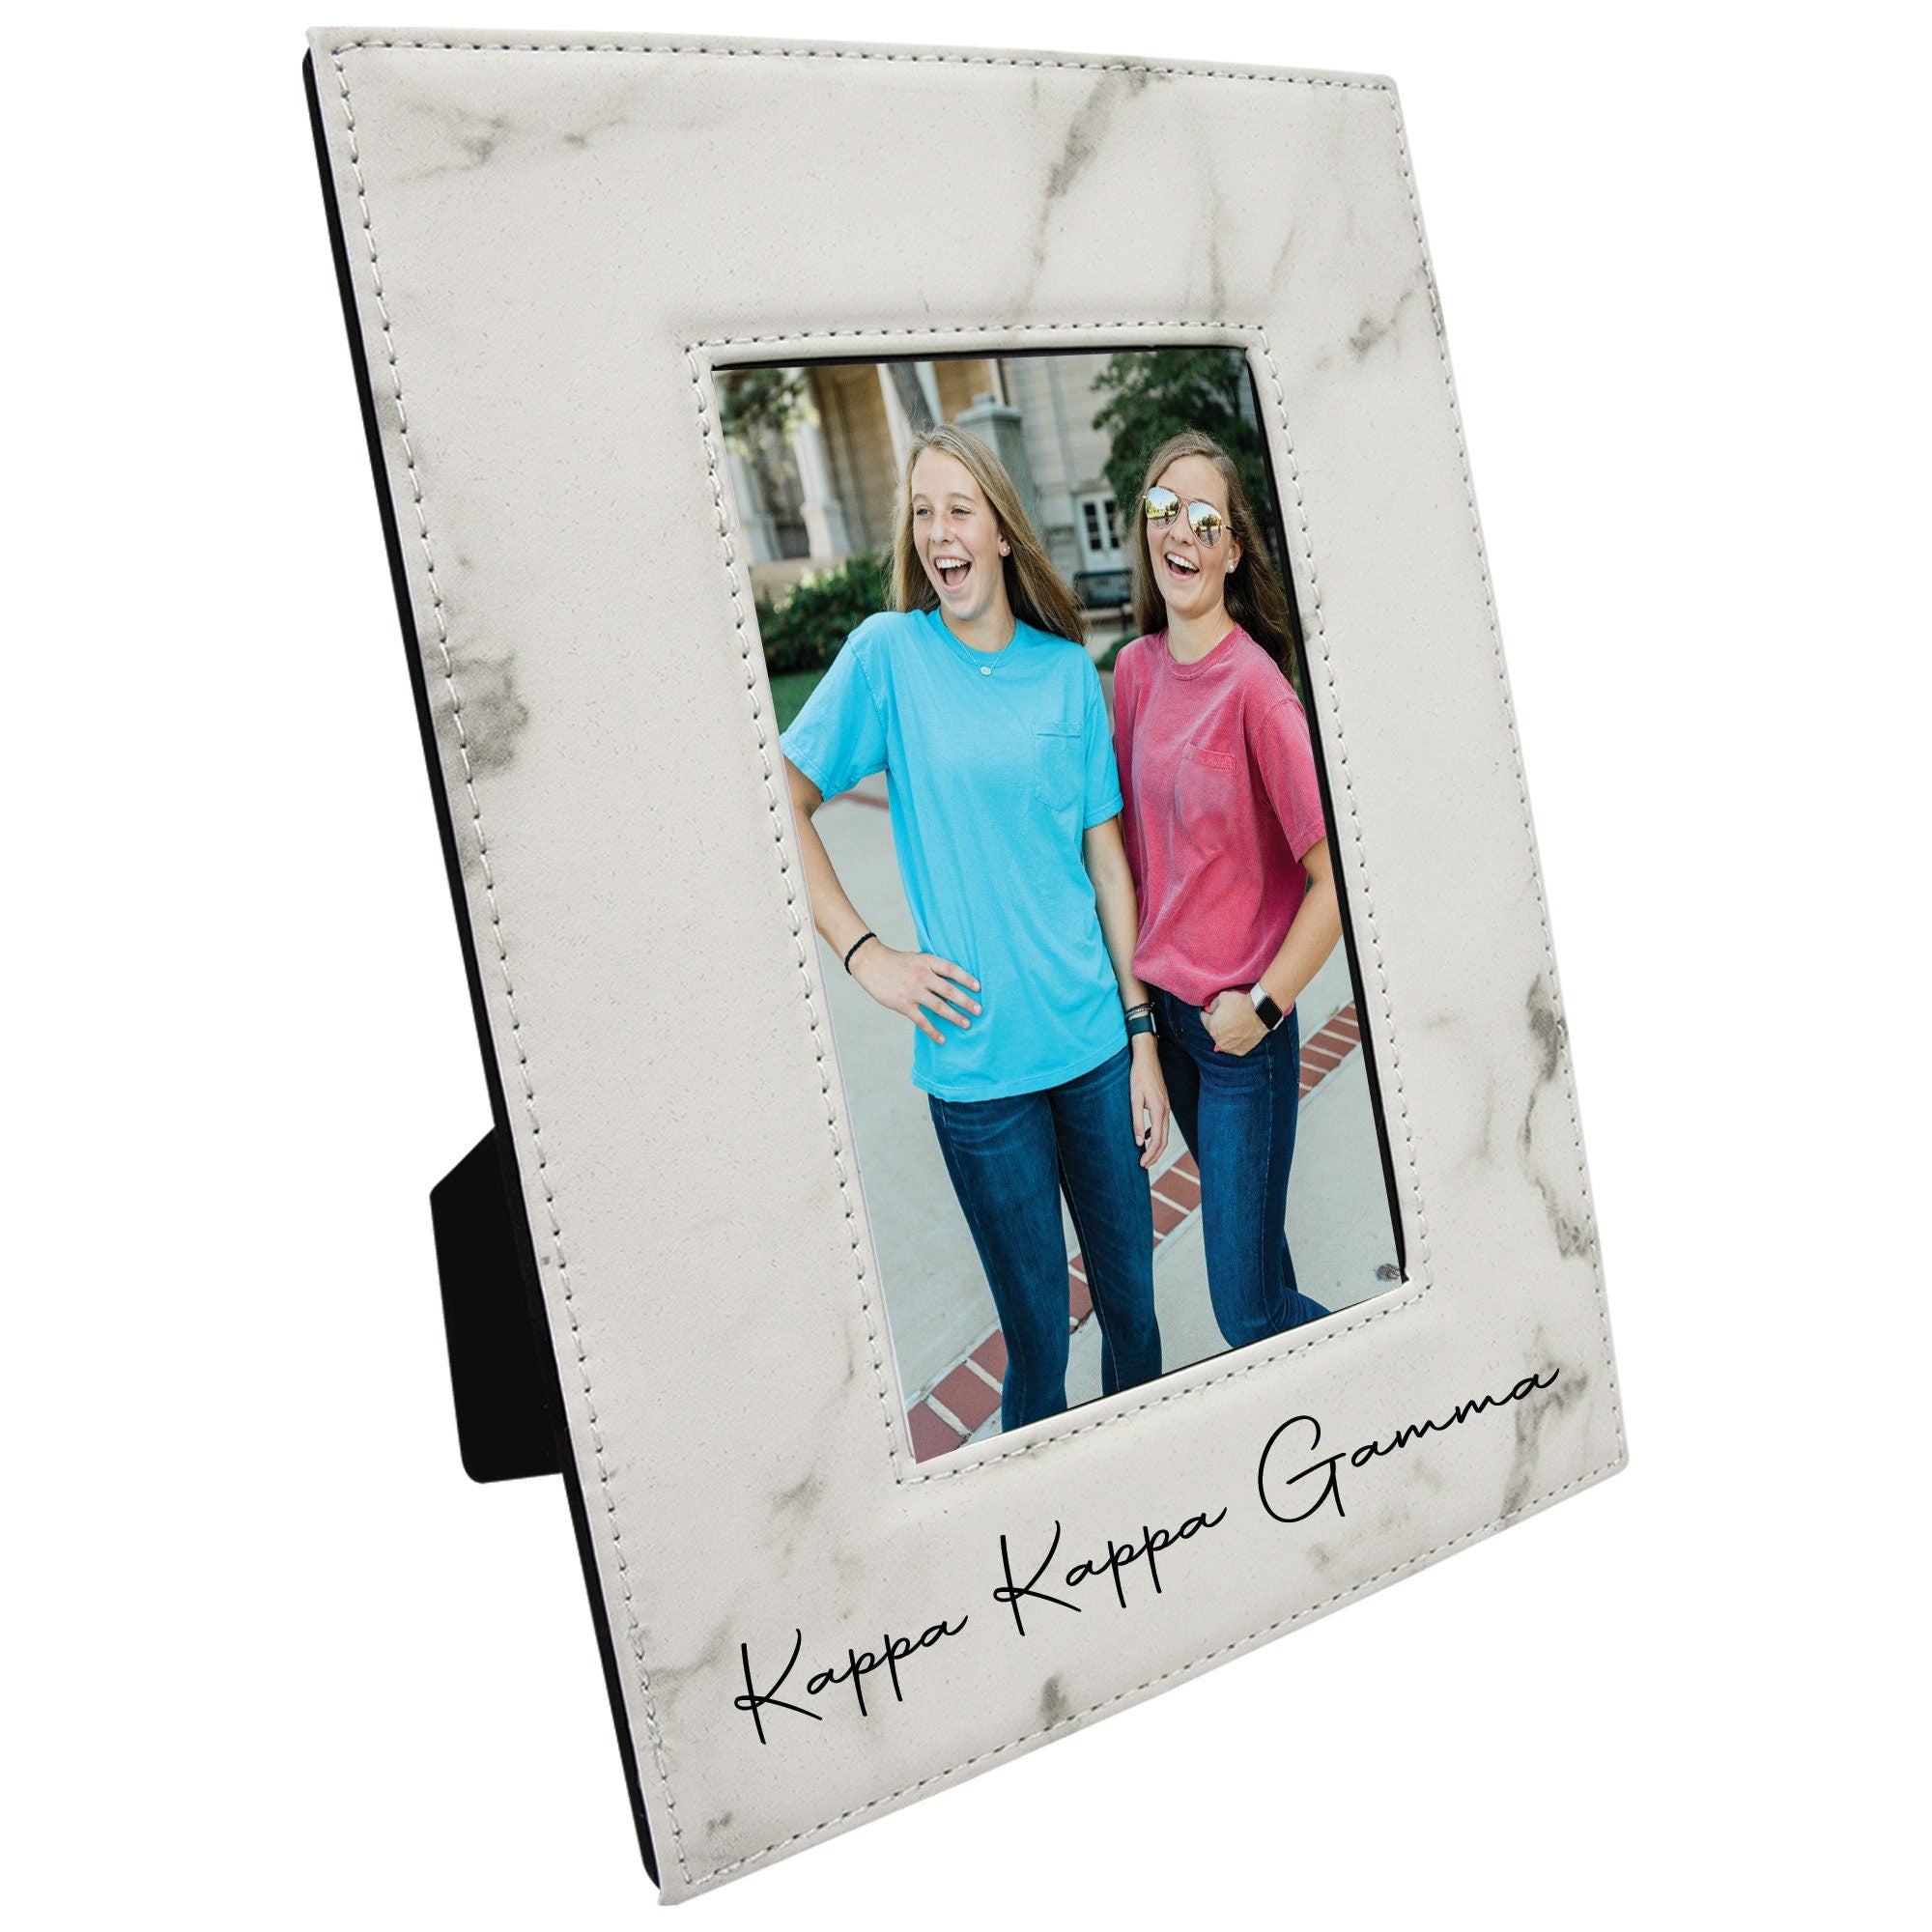 Kappa Kappa Gamma | 5x7 Picture Frame | Sorority Gift - Go Greek Chic